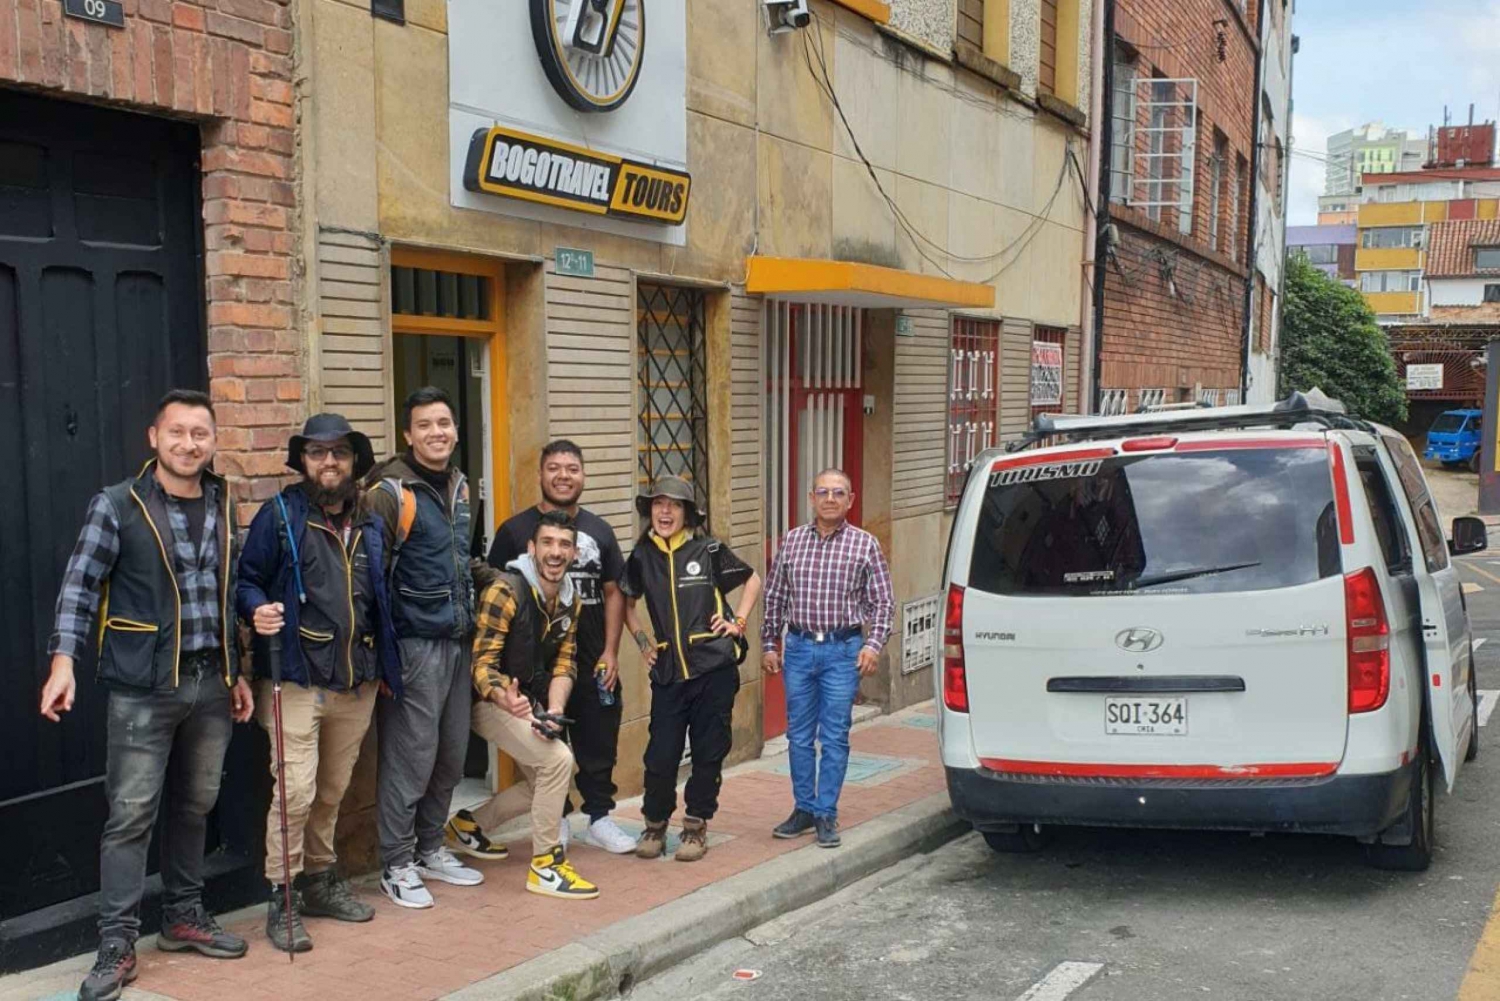 Bogotá: Ciudad Bolivar Private Tour with Cable Car Ticket